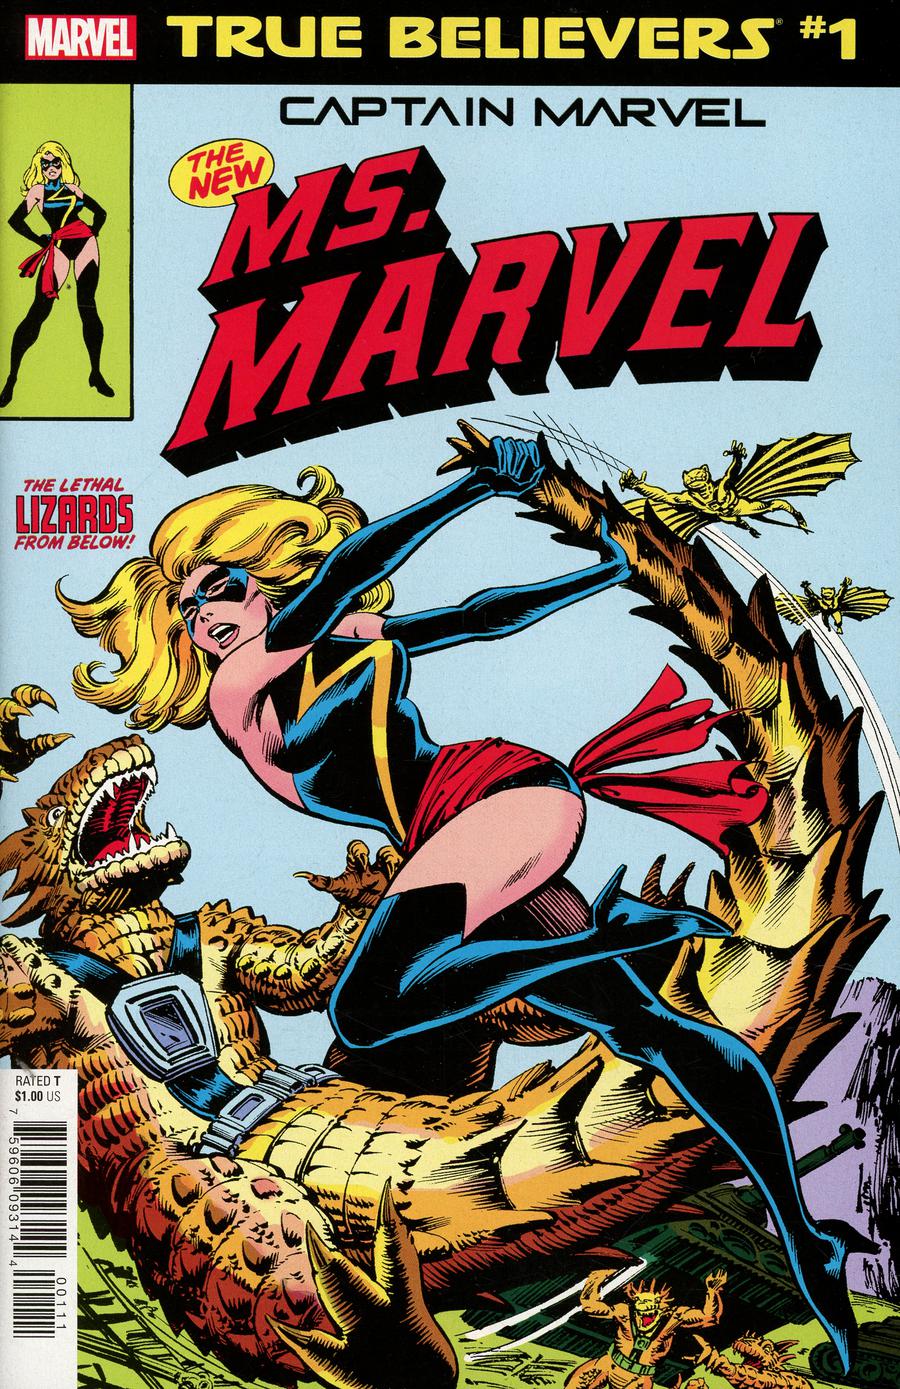 True Believers Captain Marvel New Ms Marvel #1